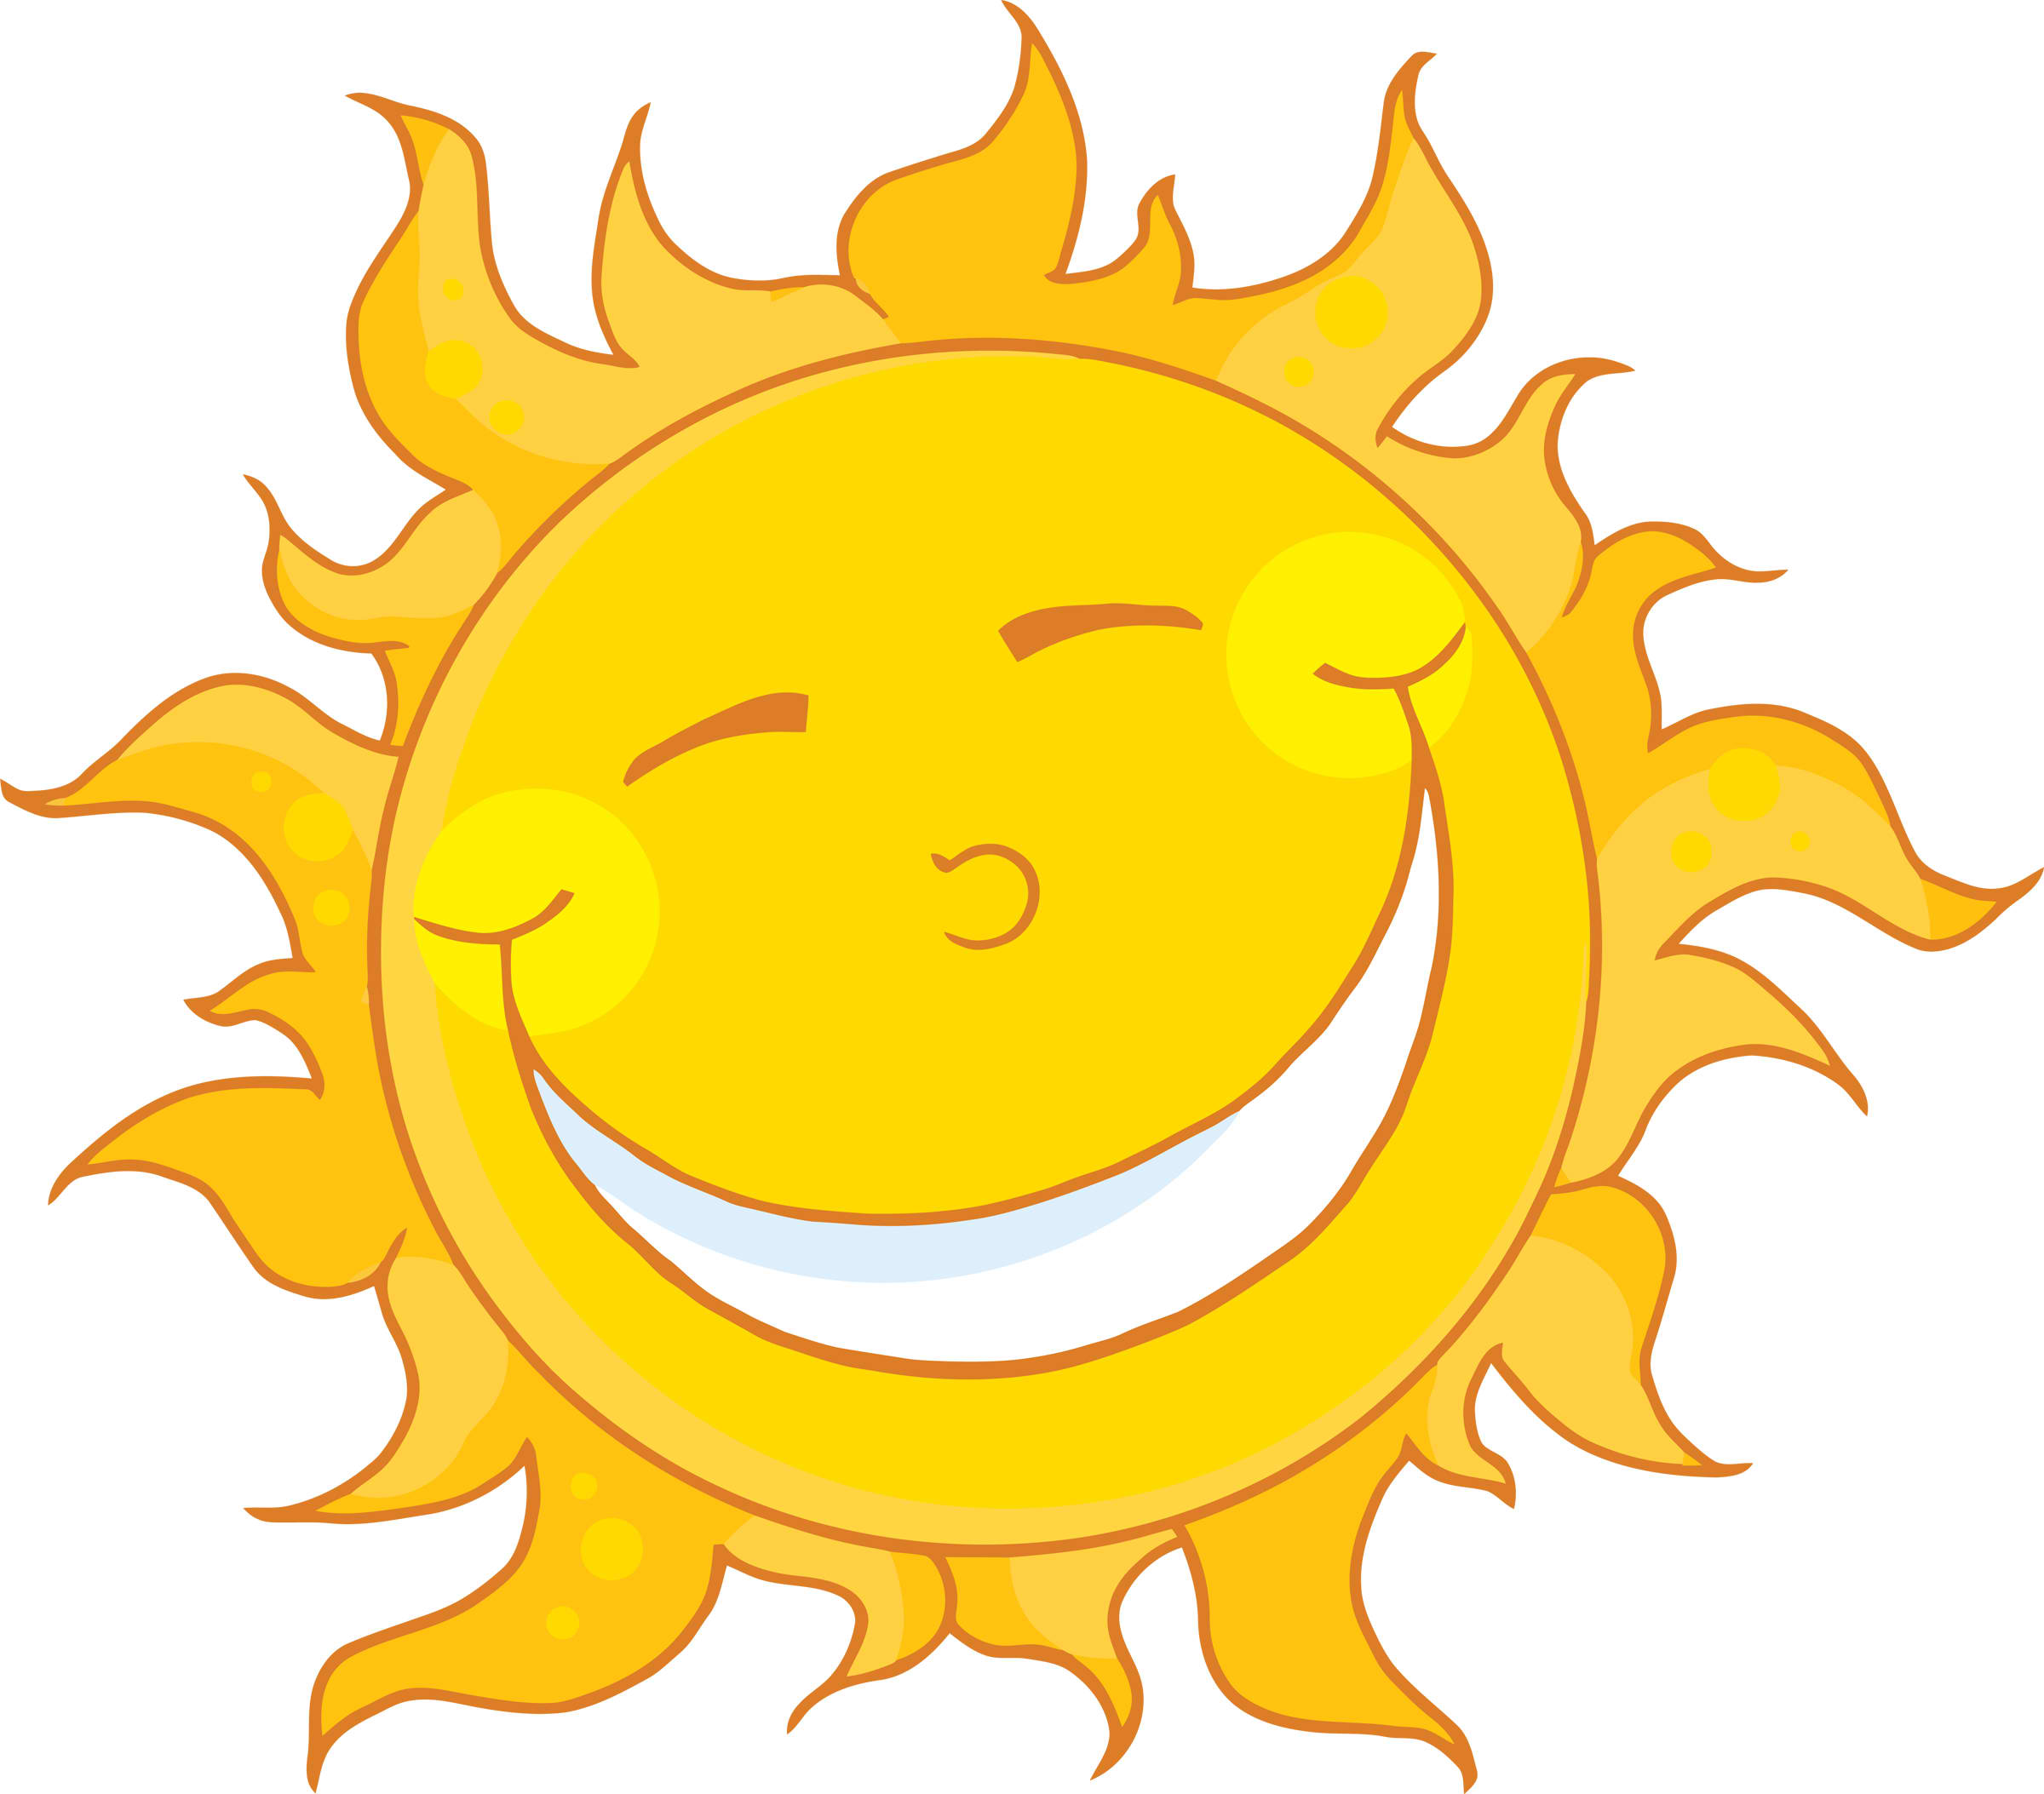 Happy Smiley Sun - ClipArt Best